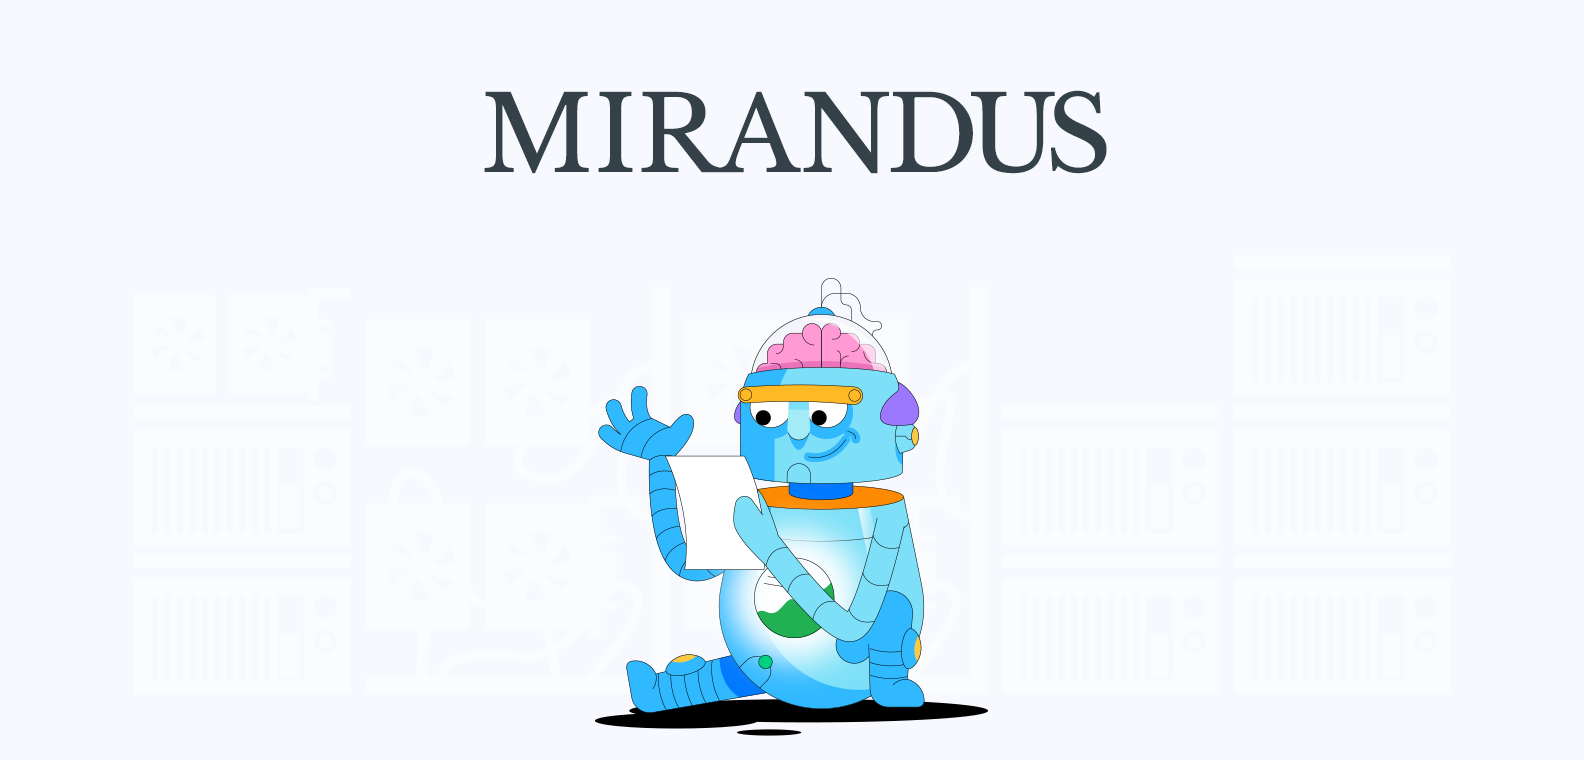 Mirandus: Medieval-Themed Fantasy World Review